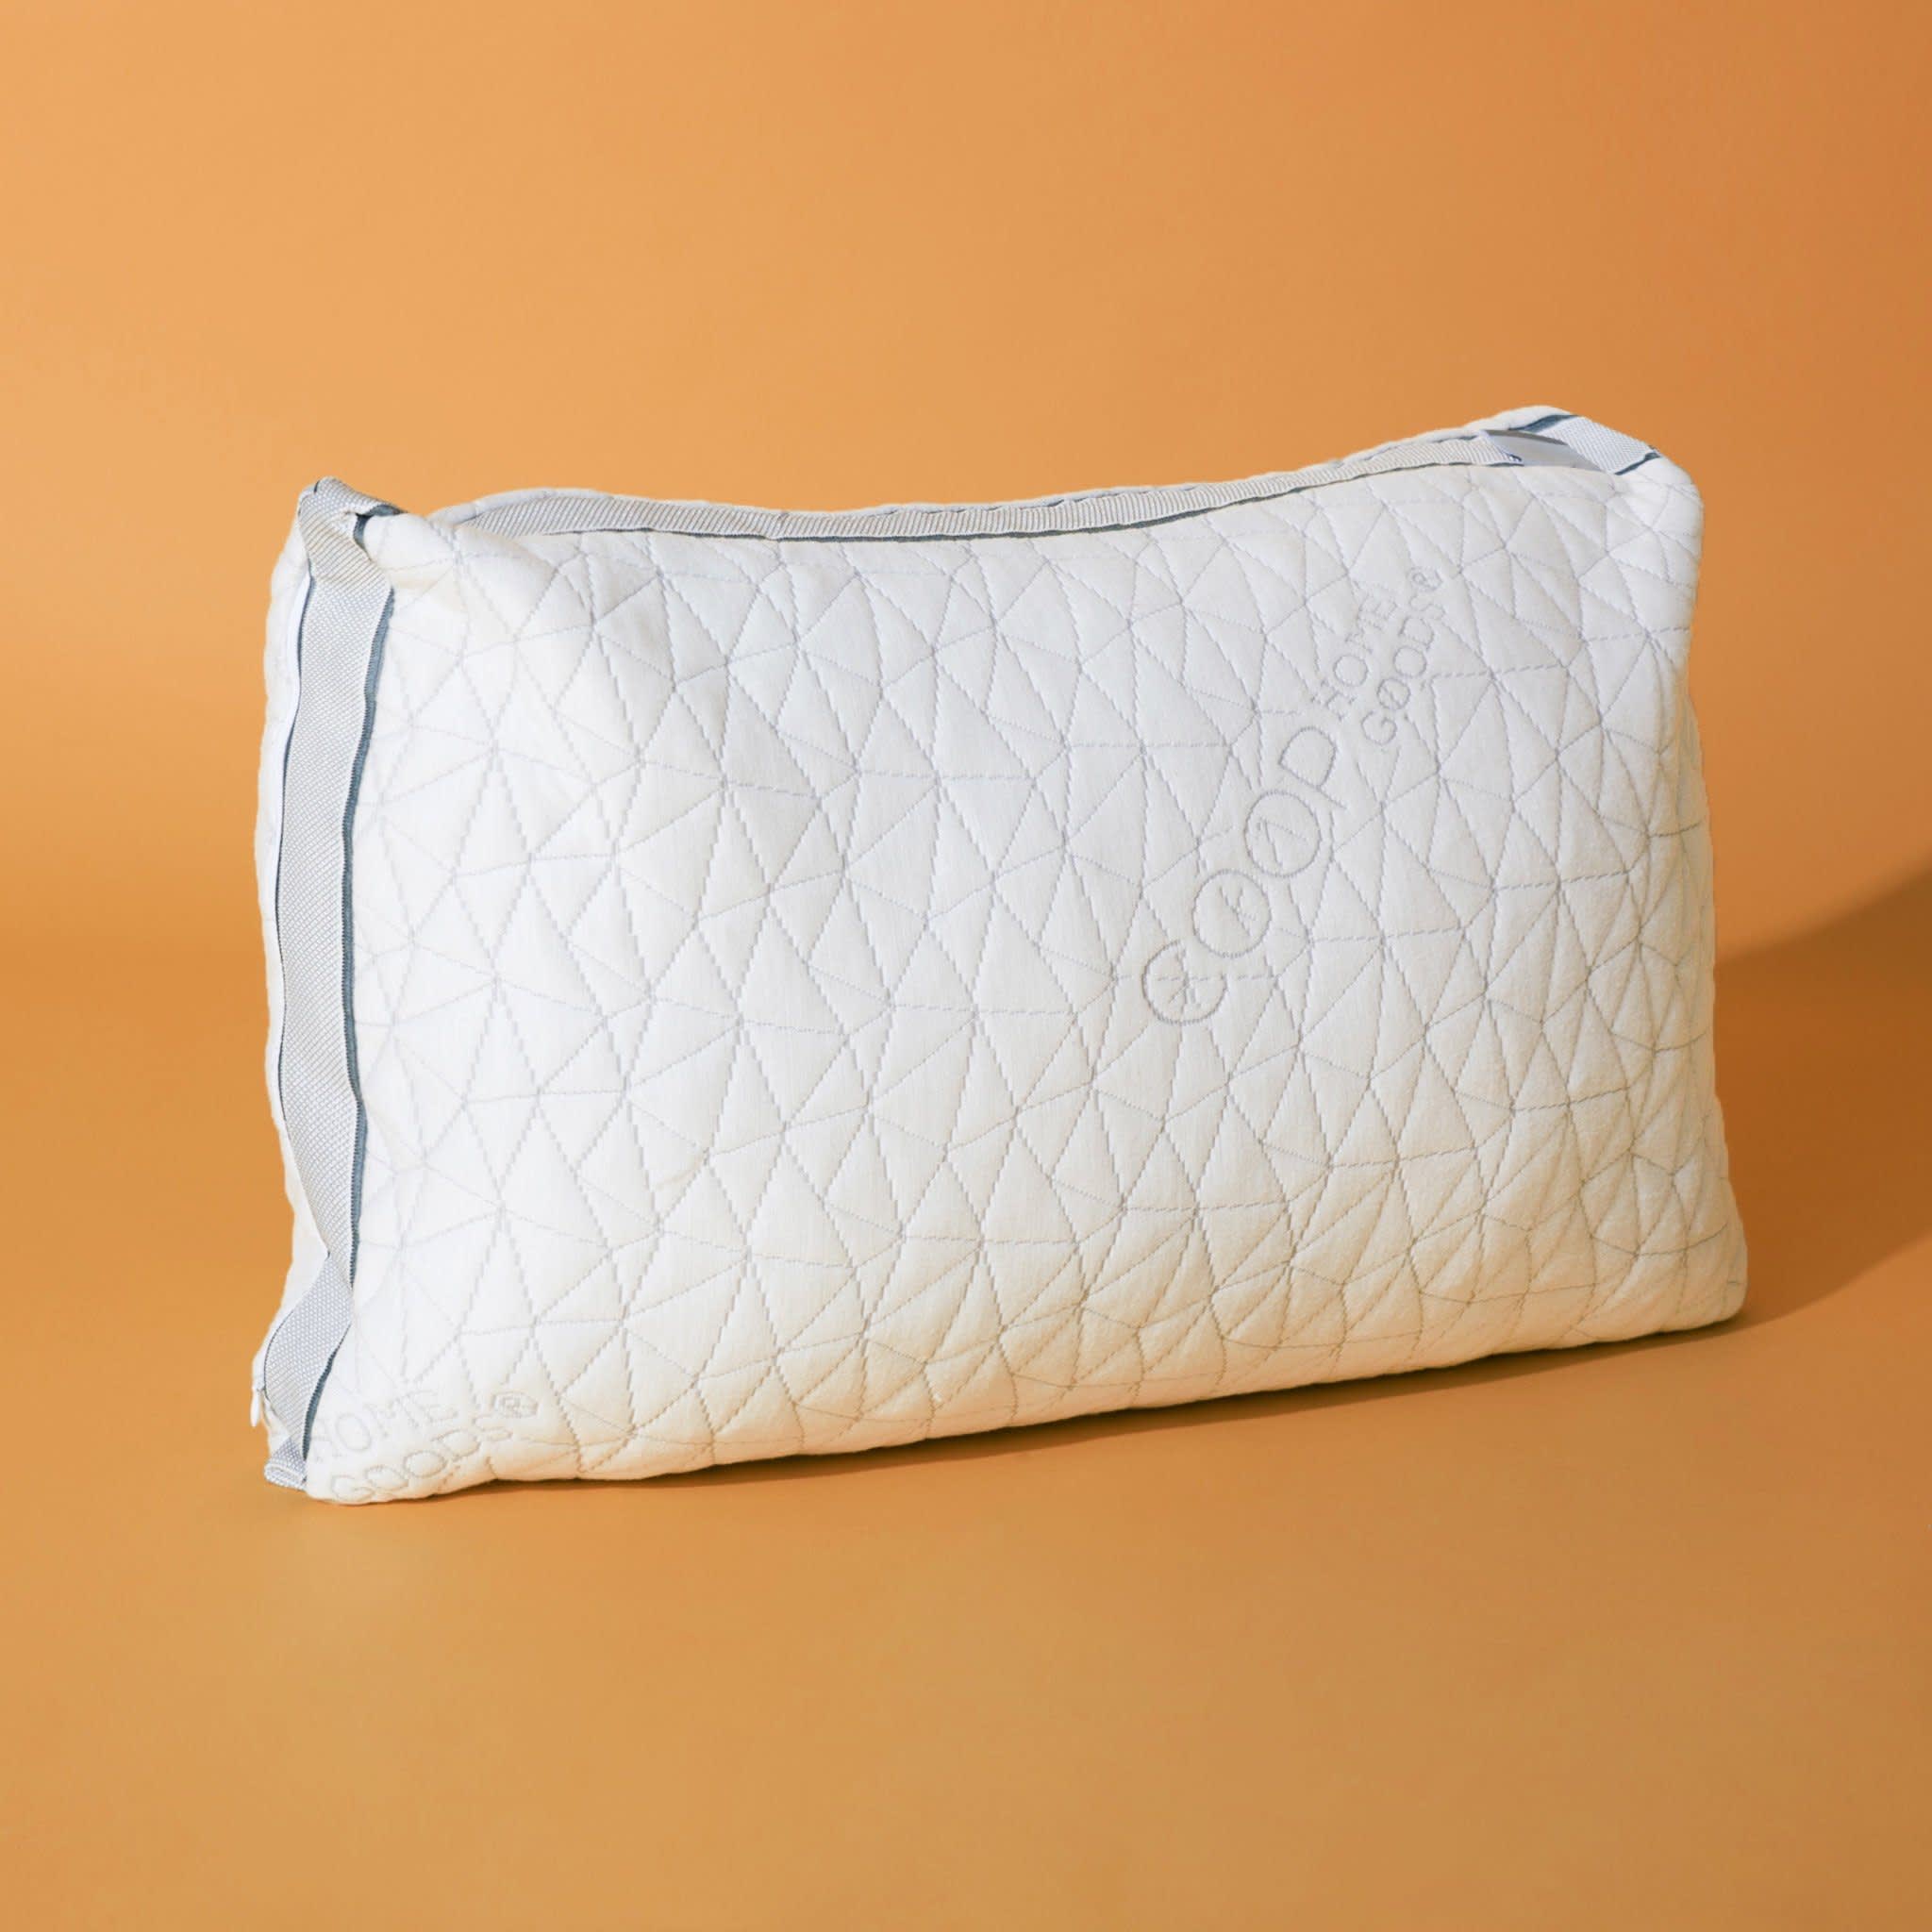 Coop Home Goods Original Memory Foam Pillow Refill, Firm Density